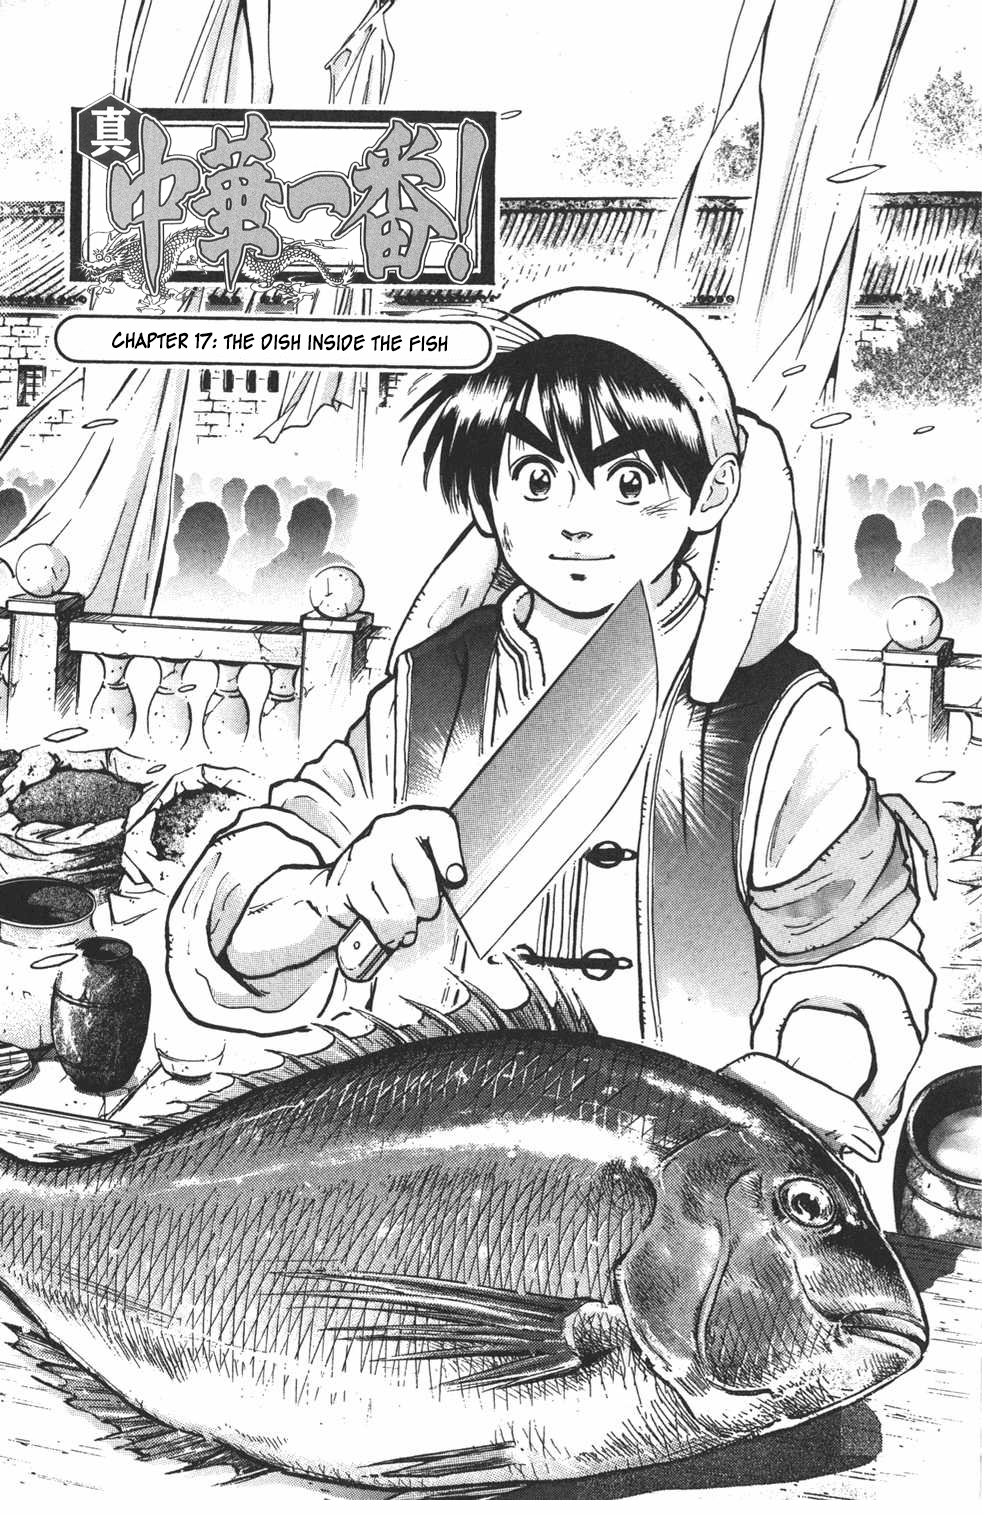 Shin Chuuka Ichiban! Vol. 3 Ch. 17 The Dish Inside the Fish